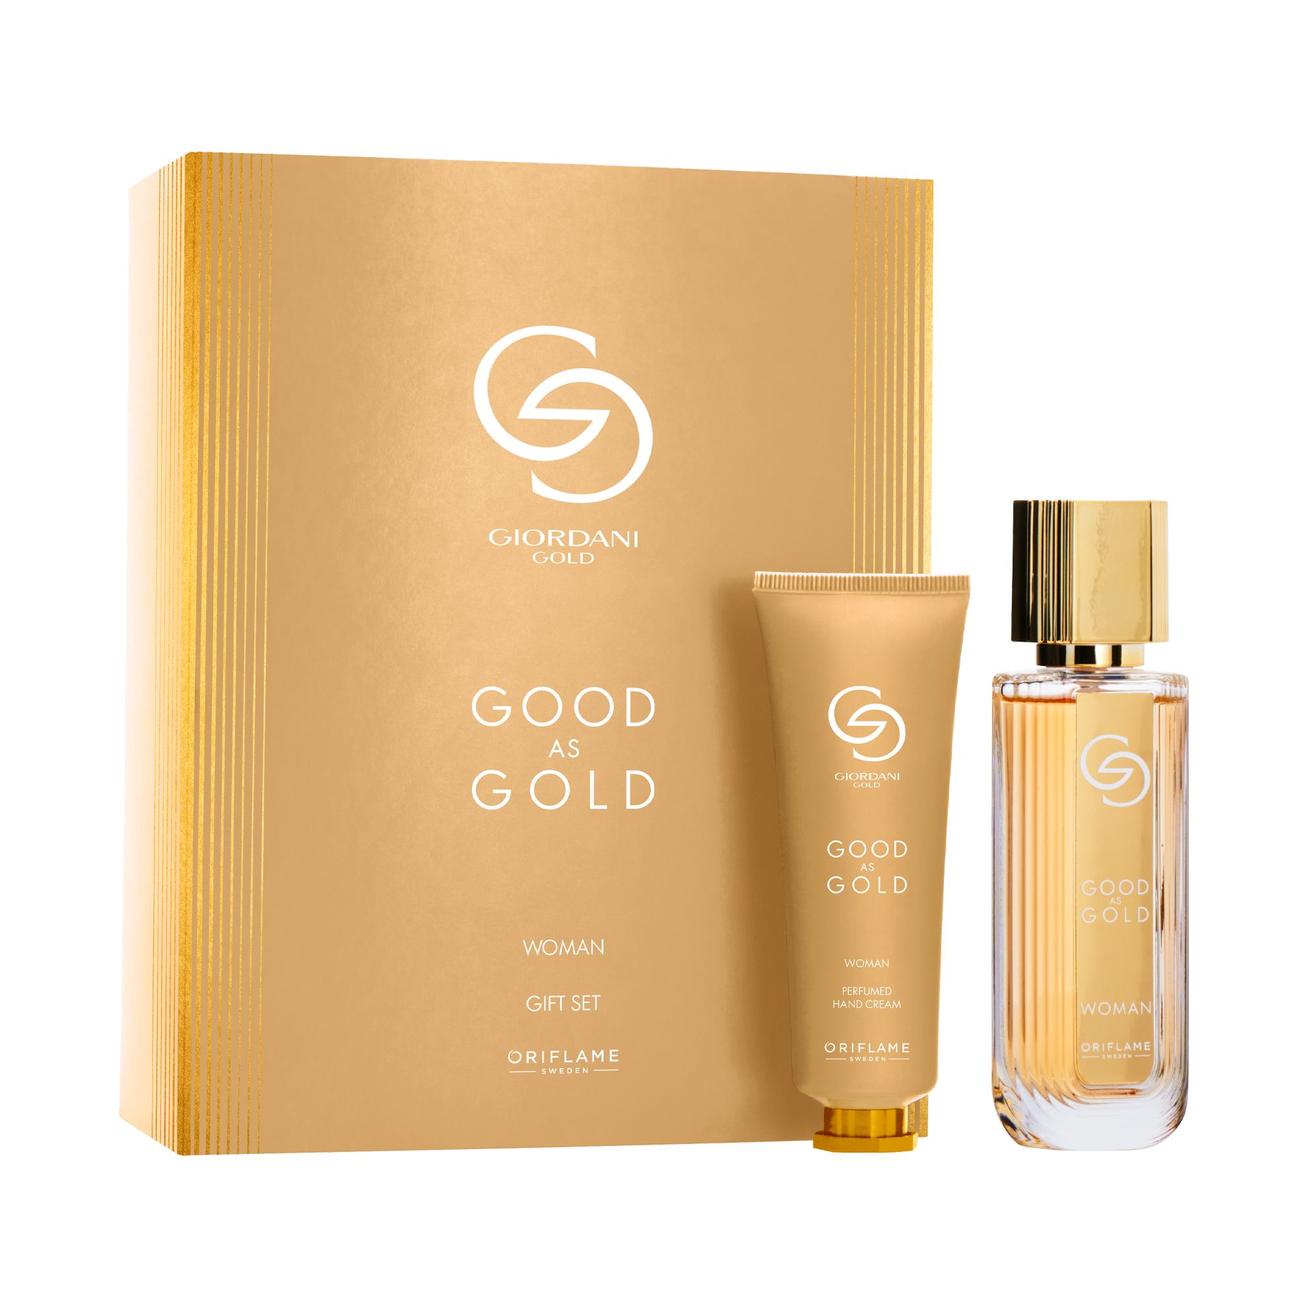 Tilbud: Good as Gold Woman Gift Set kr 379 på Oriflame